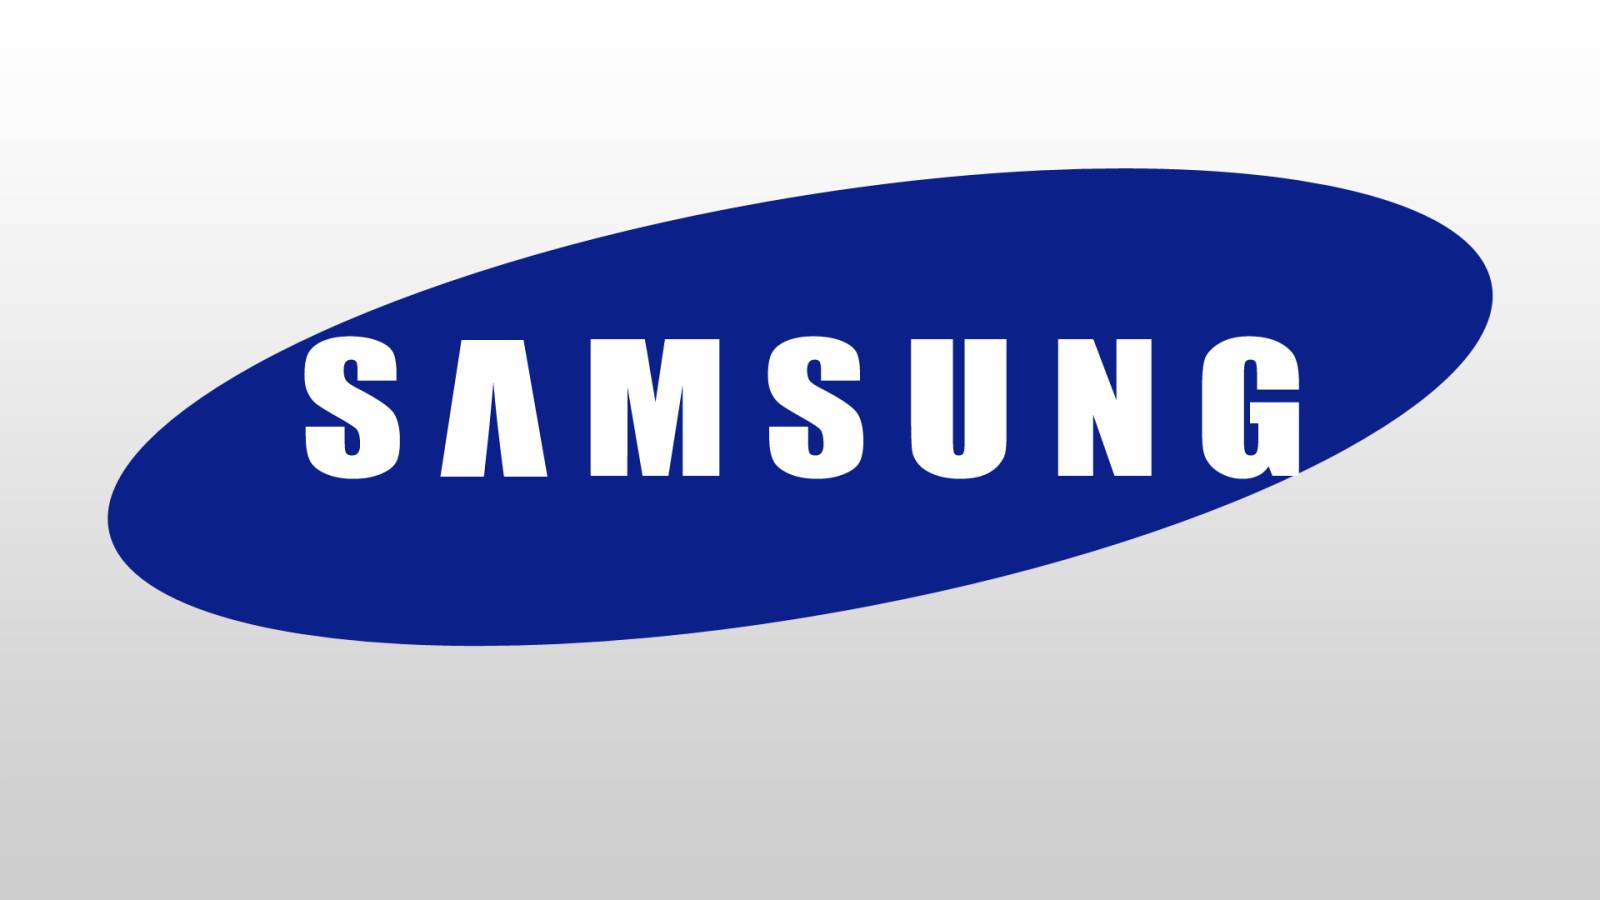 Samsung Ironizeaza la Cupa Mondiala Apple si Lipsa unui iPhone Pliabil